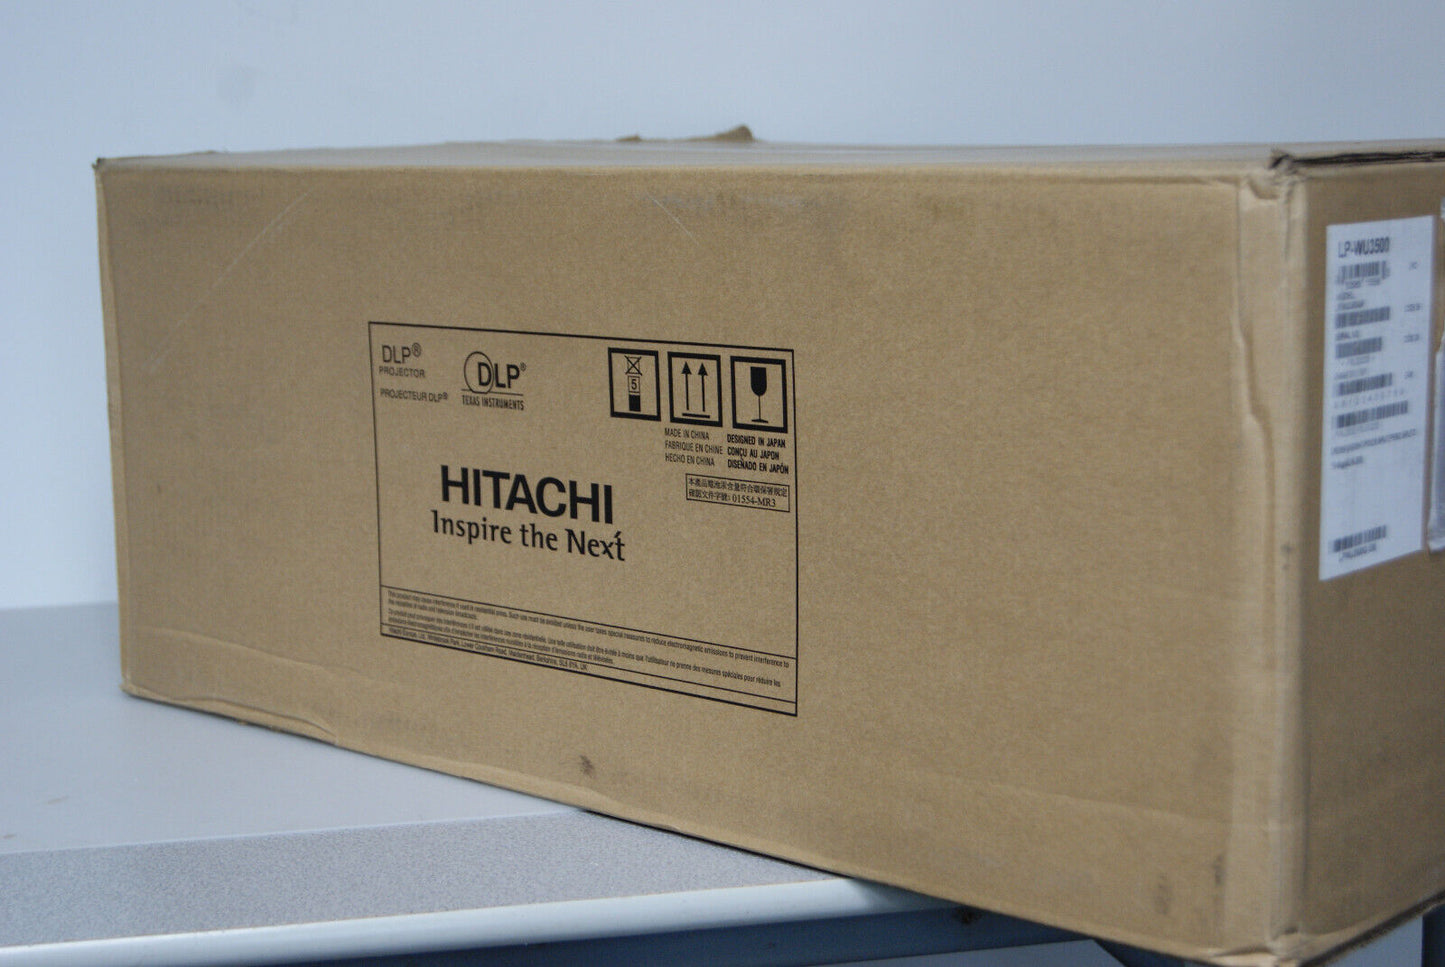 Hitachi LP-WU3500 / WUXGA 3500 Lumen LED 1080p Full HD Projector / DLP